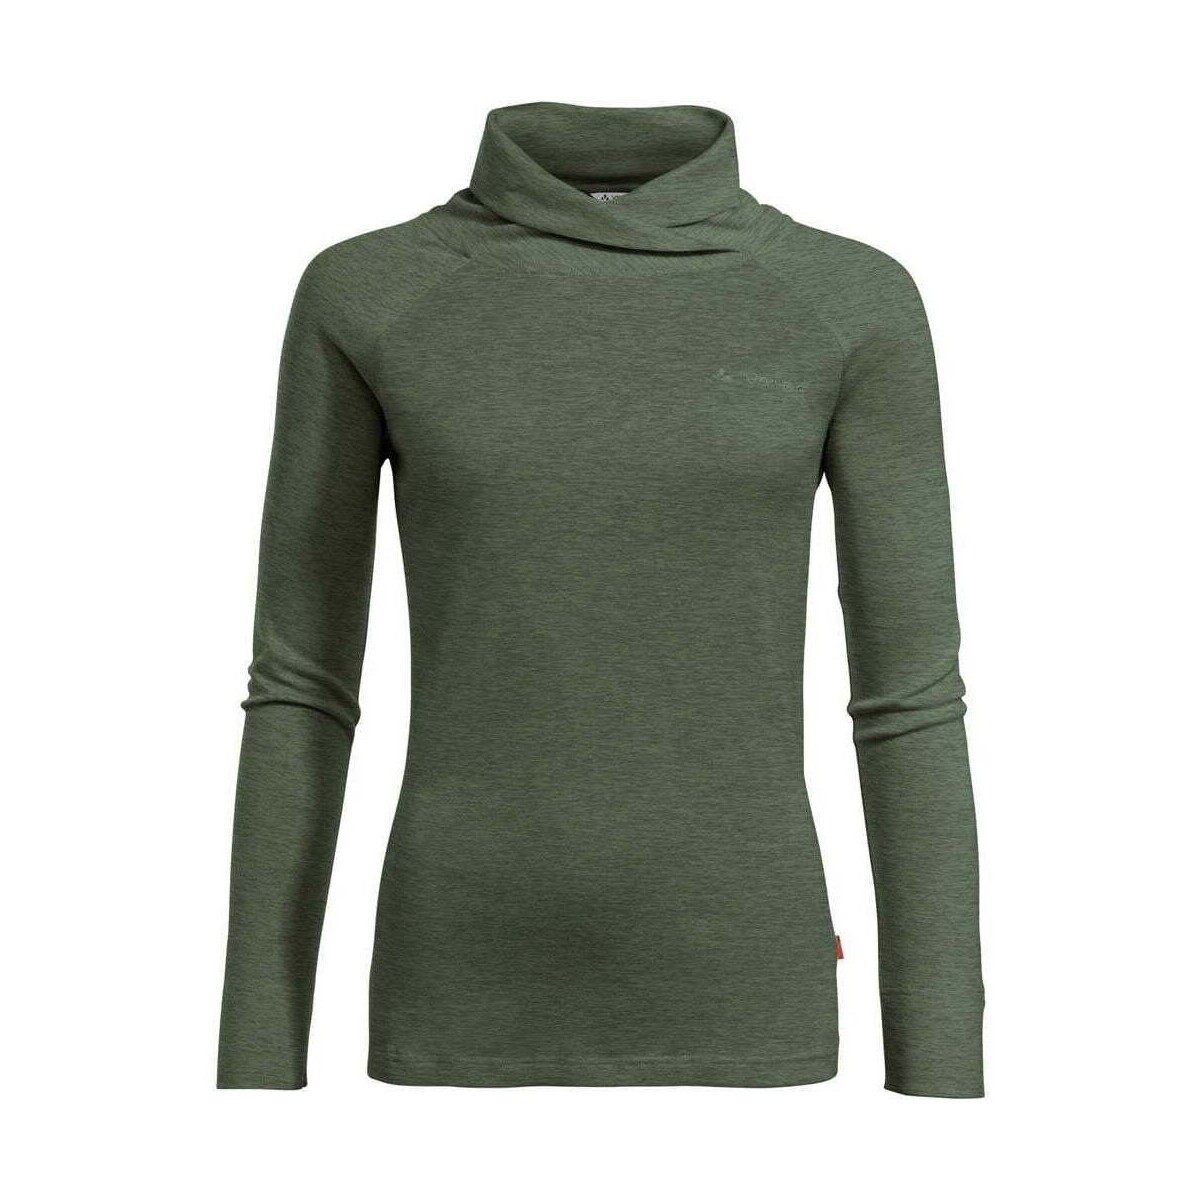 textil Mujer Camisas Vaude Womens Altiplano LS T-Shirt Verde